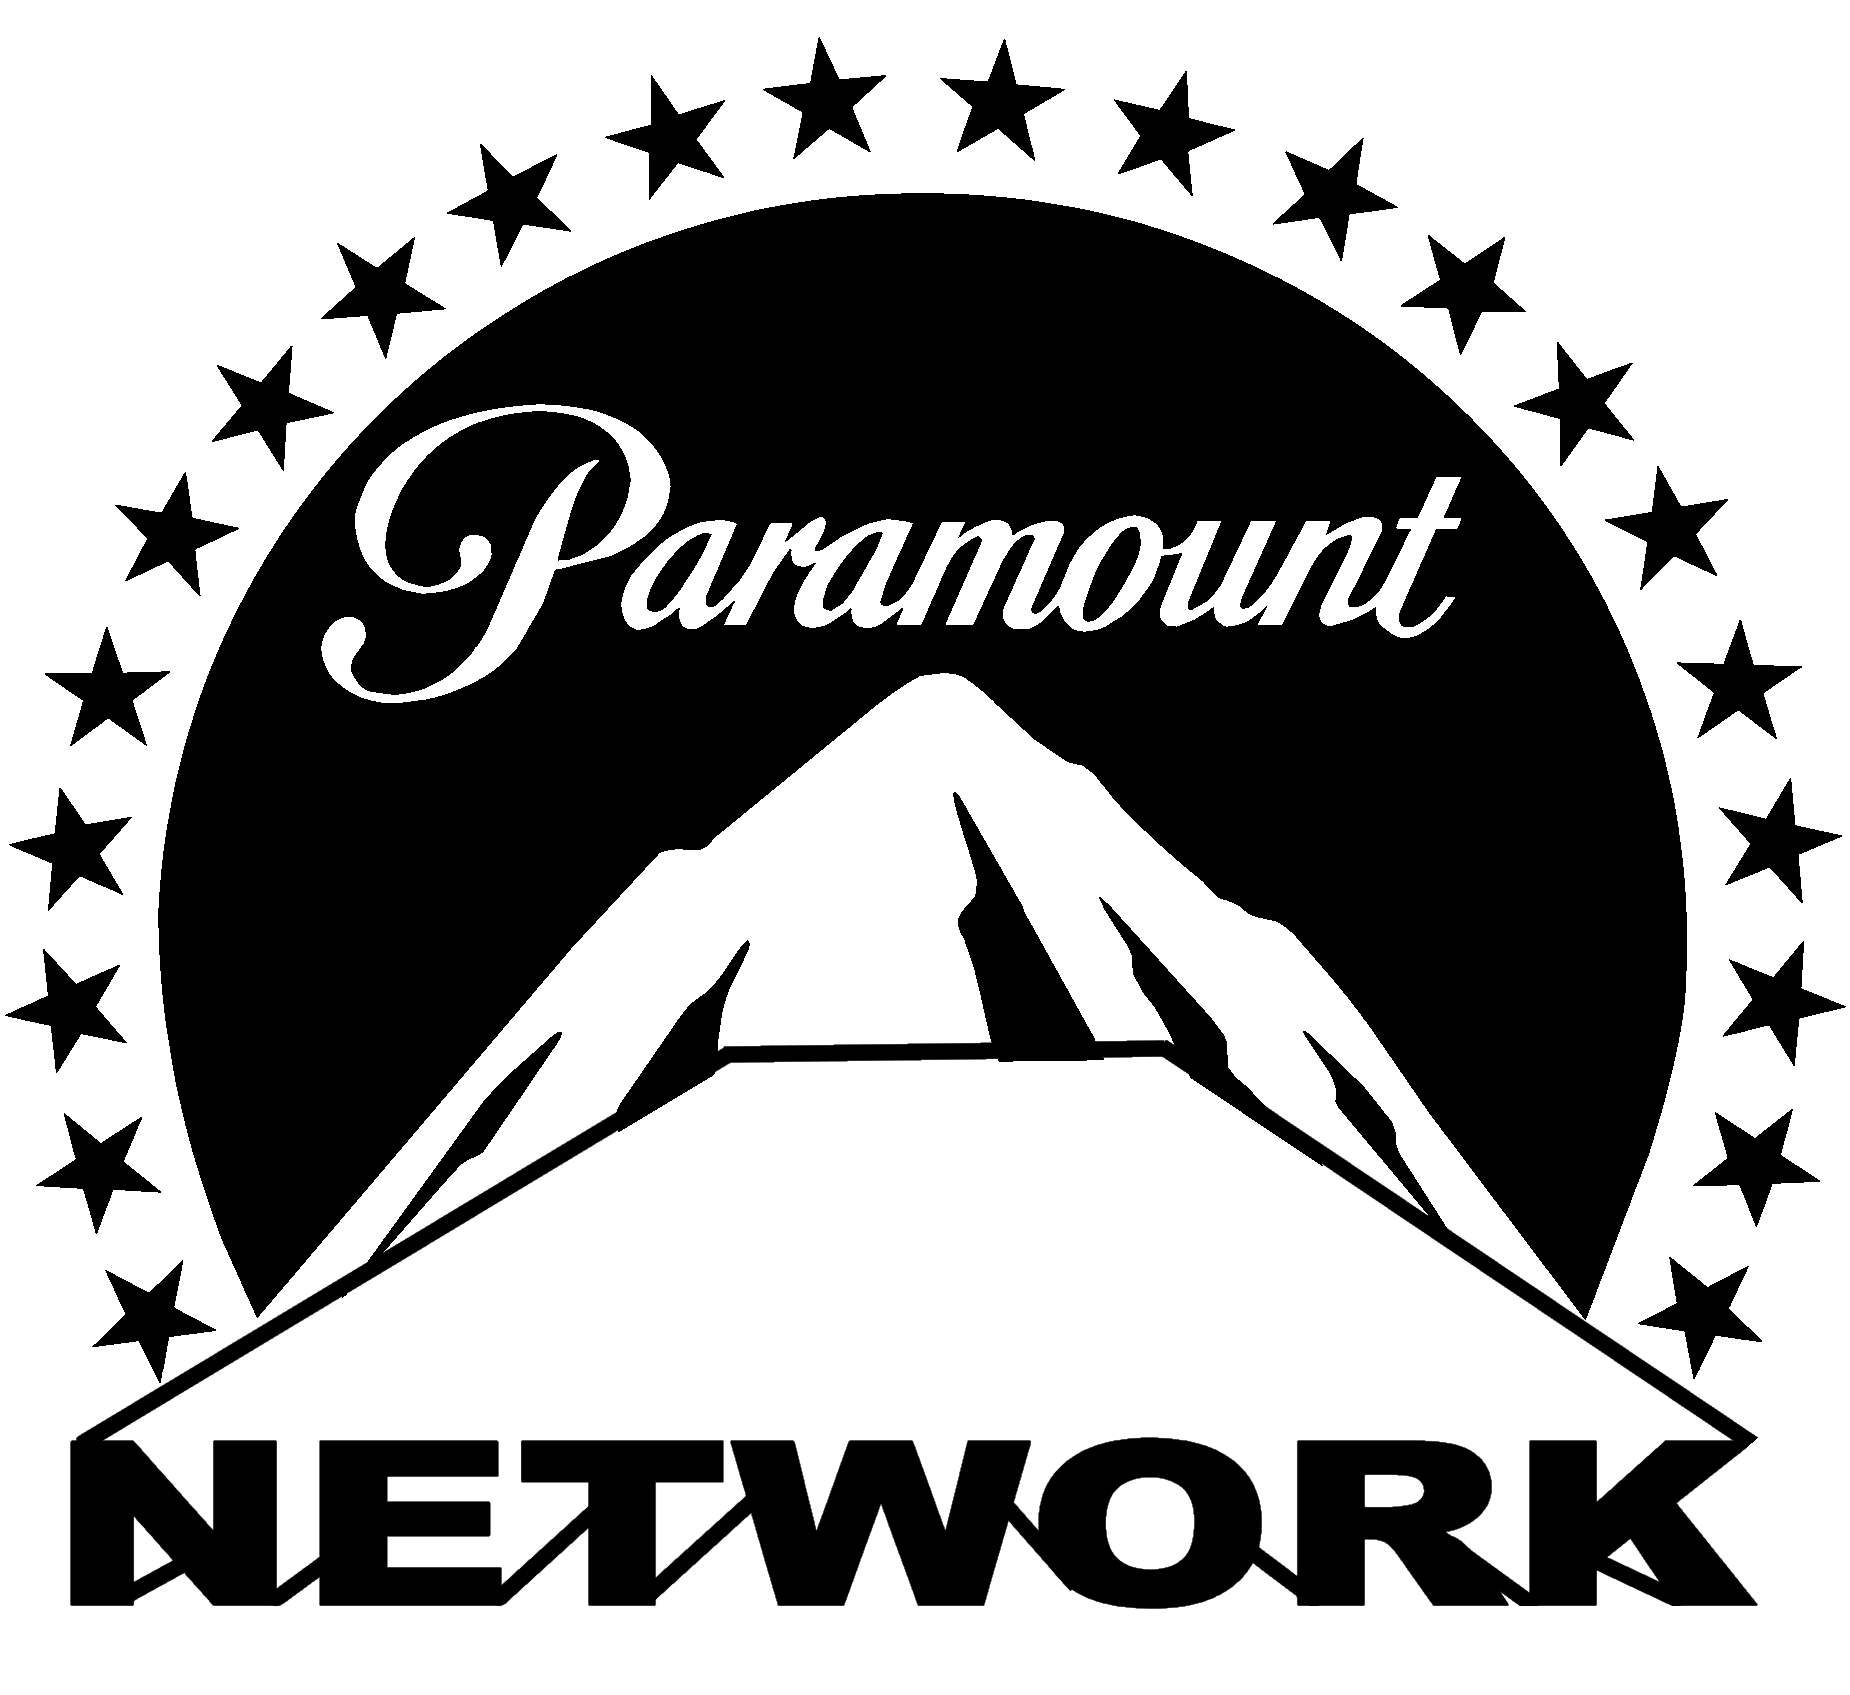 TV Network Logo - Paramount Television Network | Dream Logos Wiki | FANDOM powered by ...